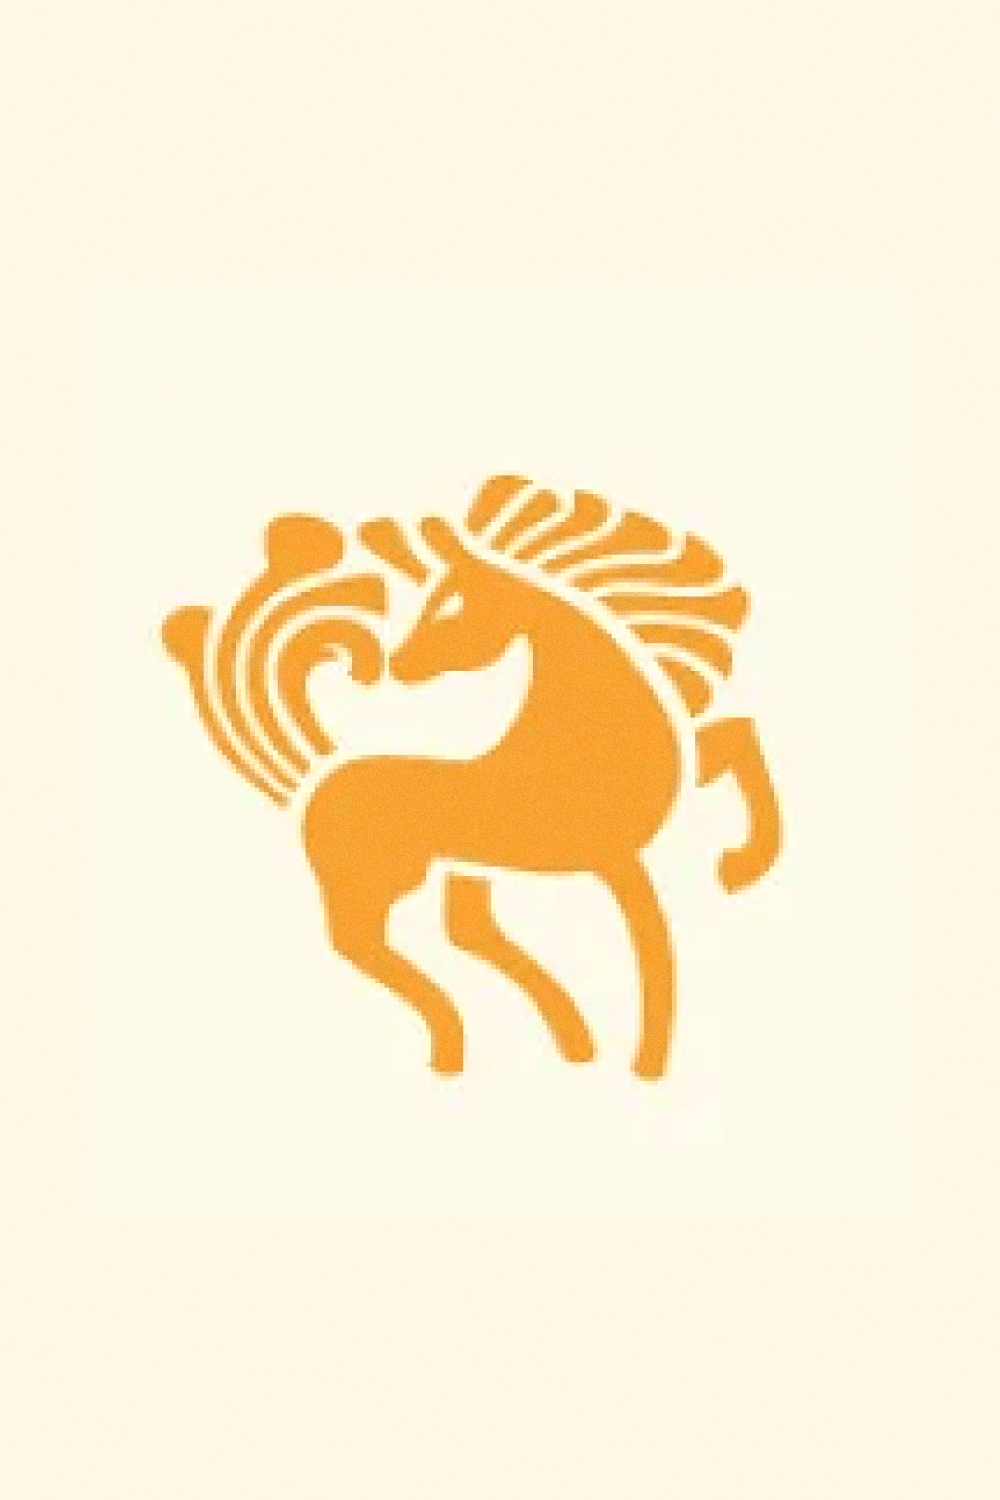 Horse corp logo headline.